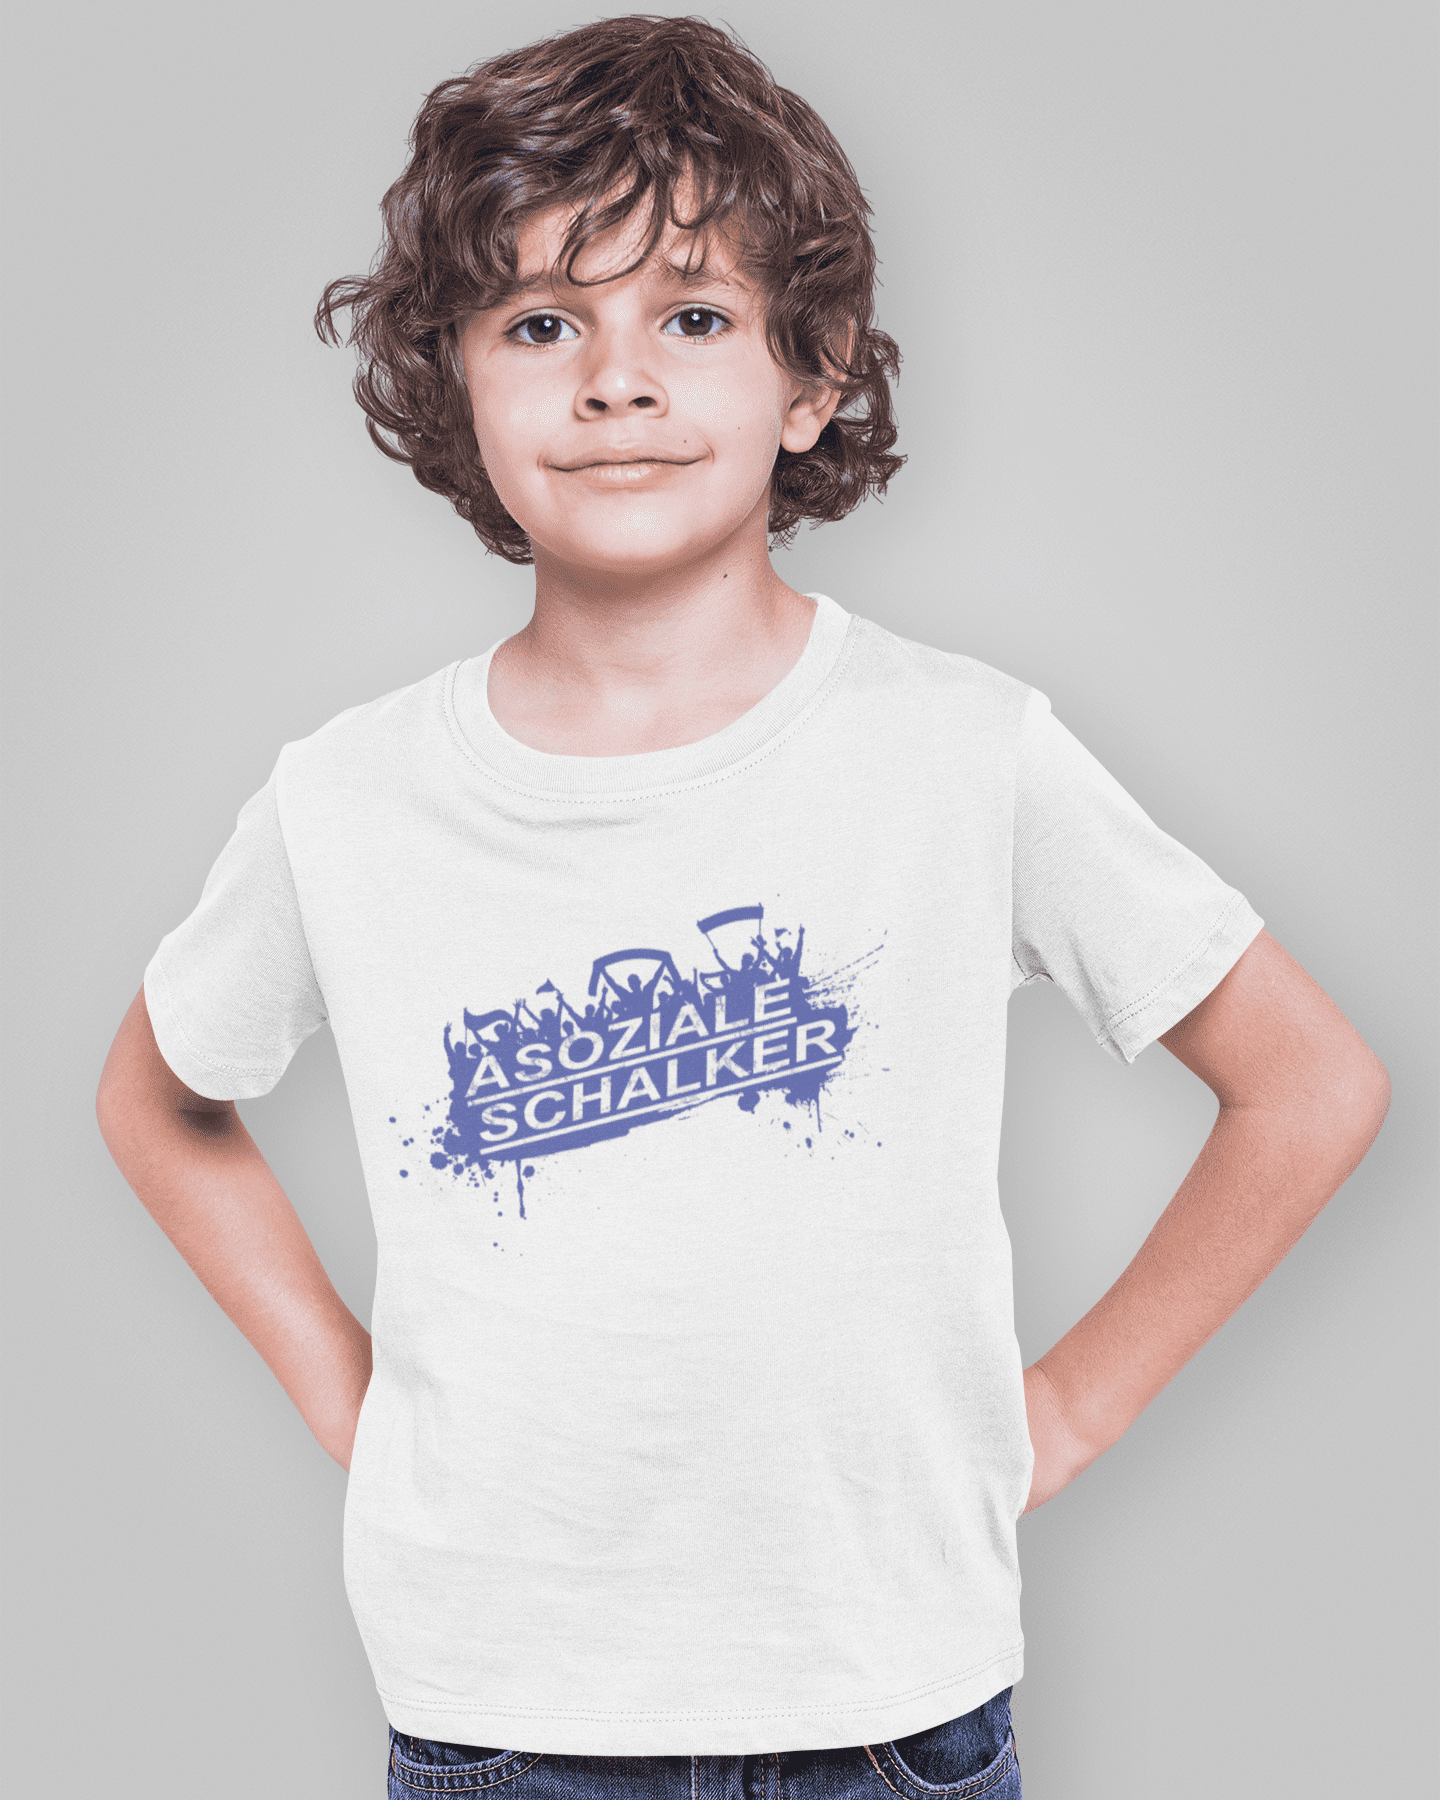 Asoziale Schalker  - Kinder T-Shirt